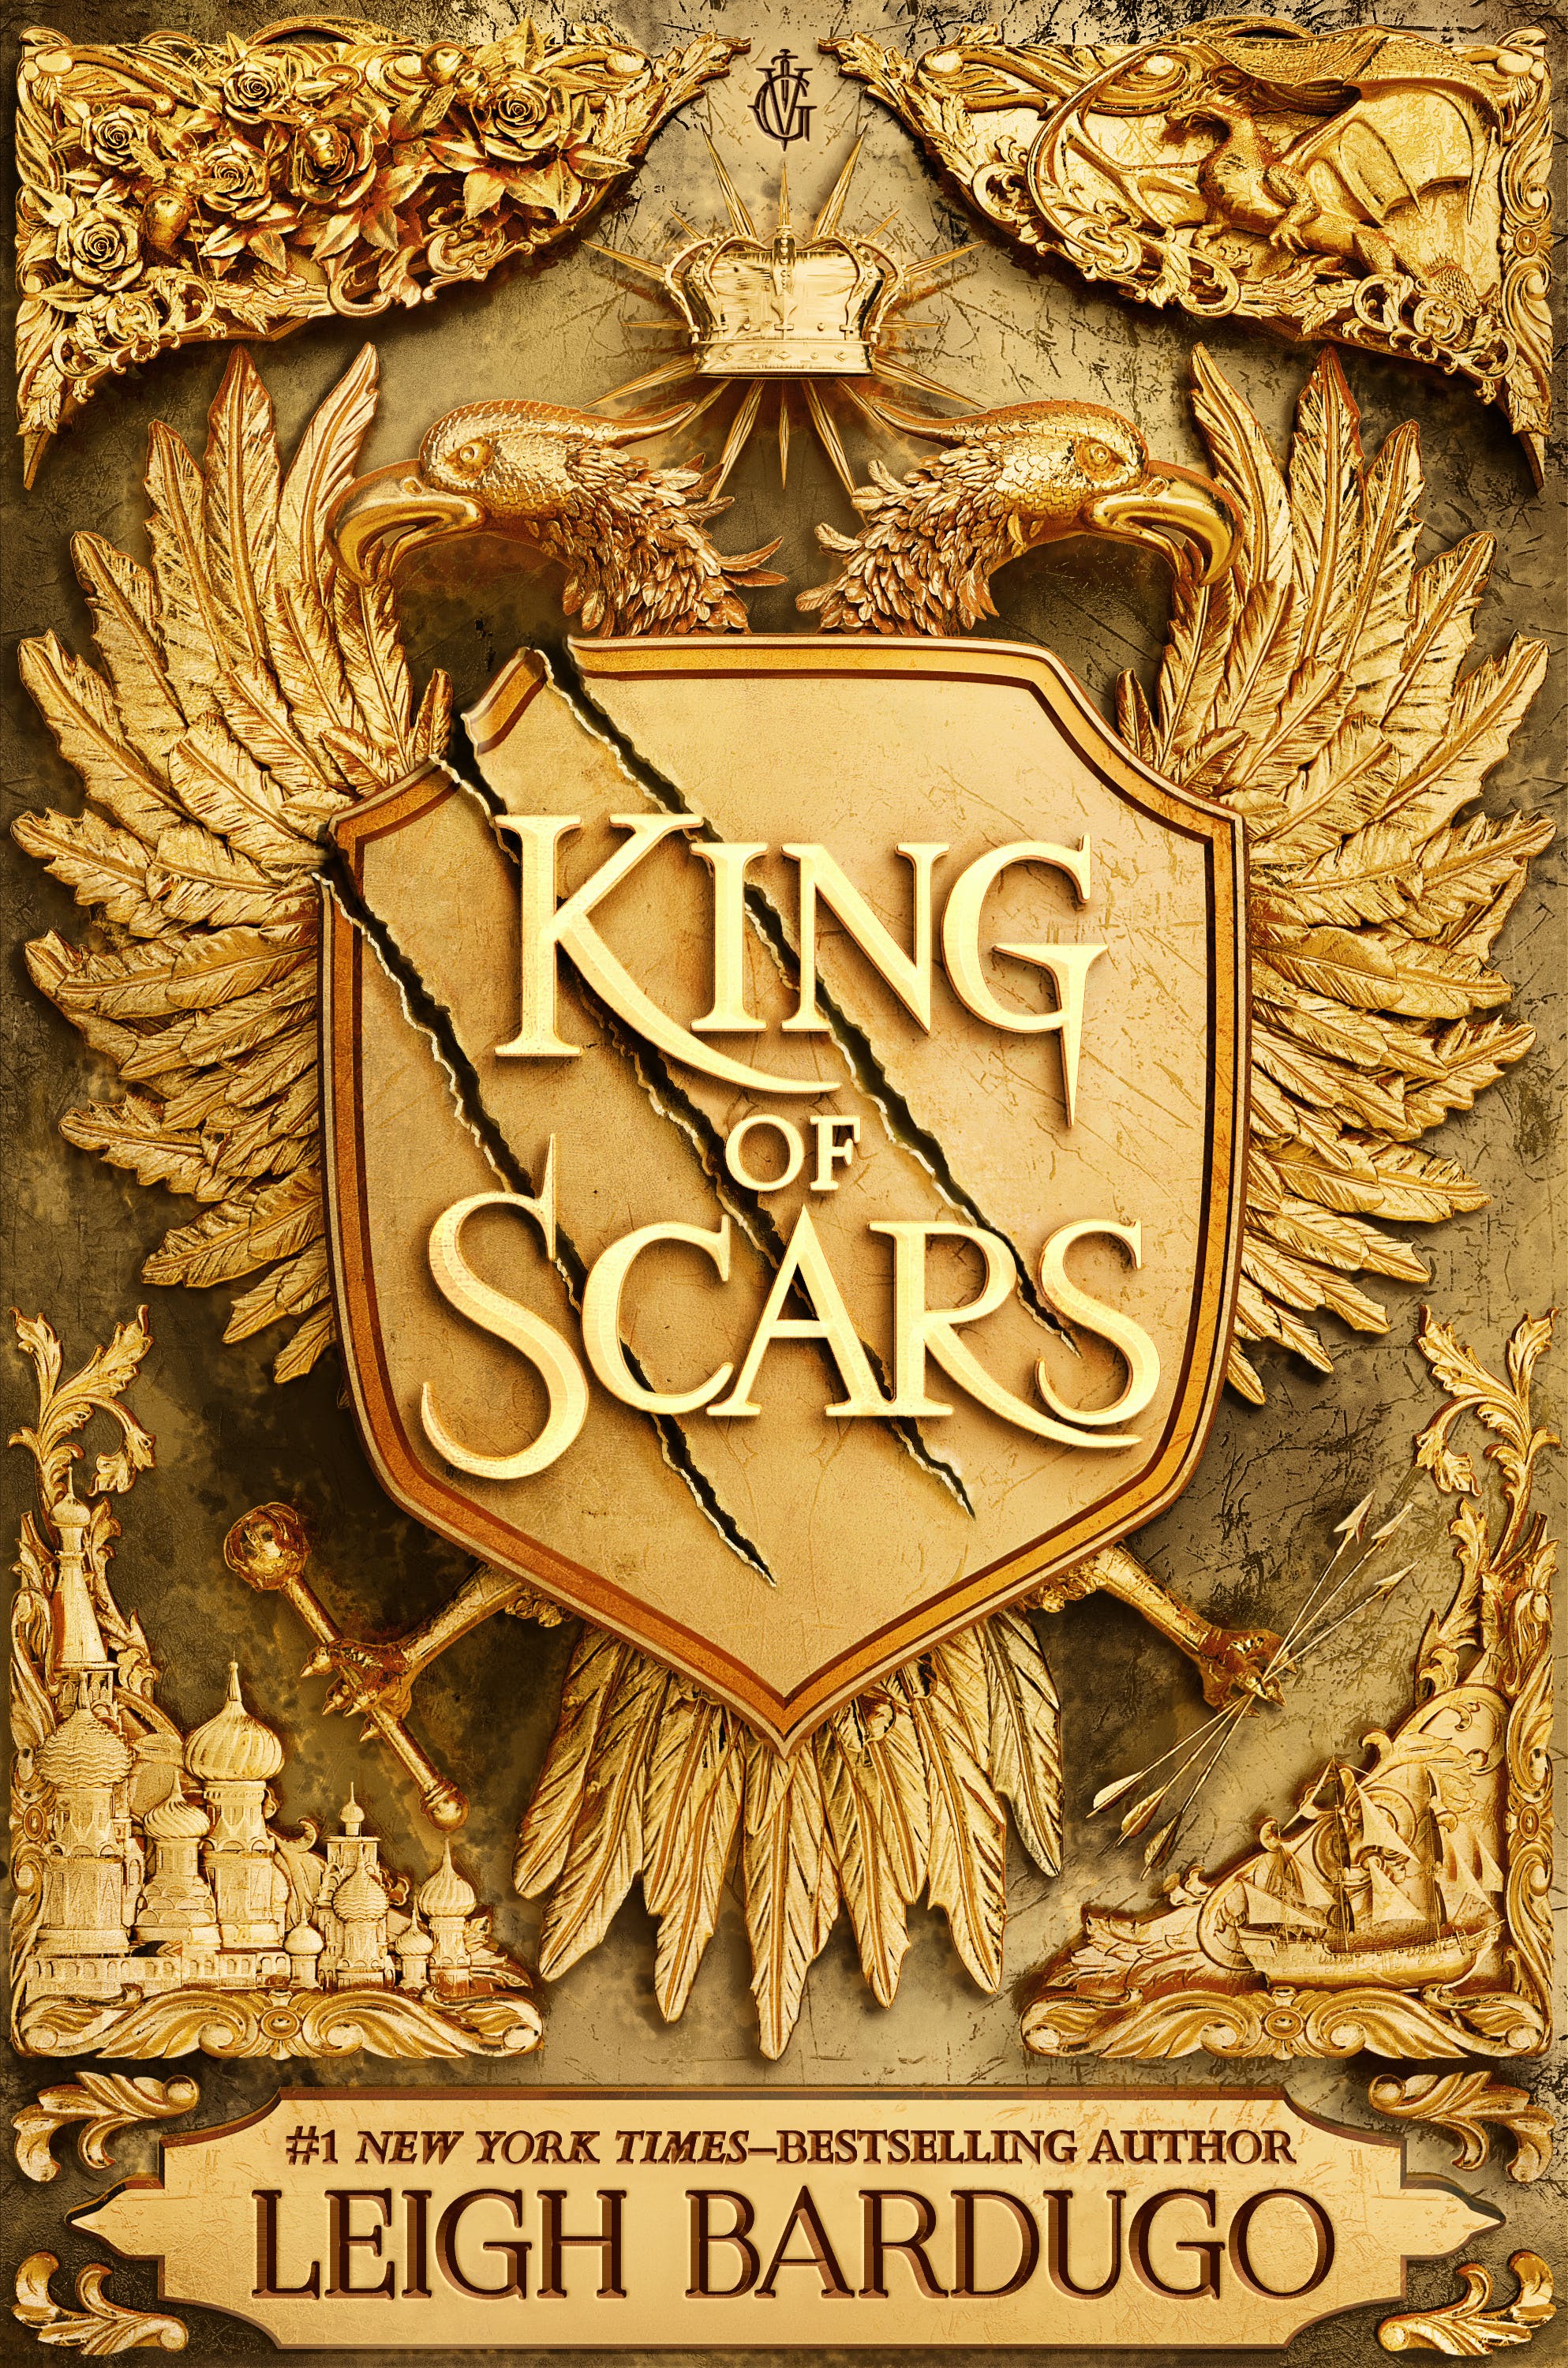 Bardugo Leigh King of Scars leigh bardugo king of scars